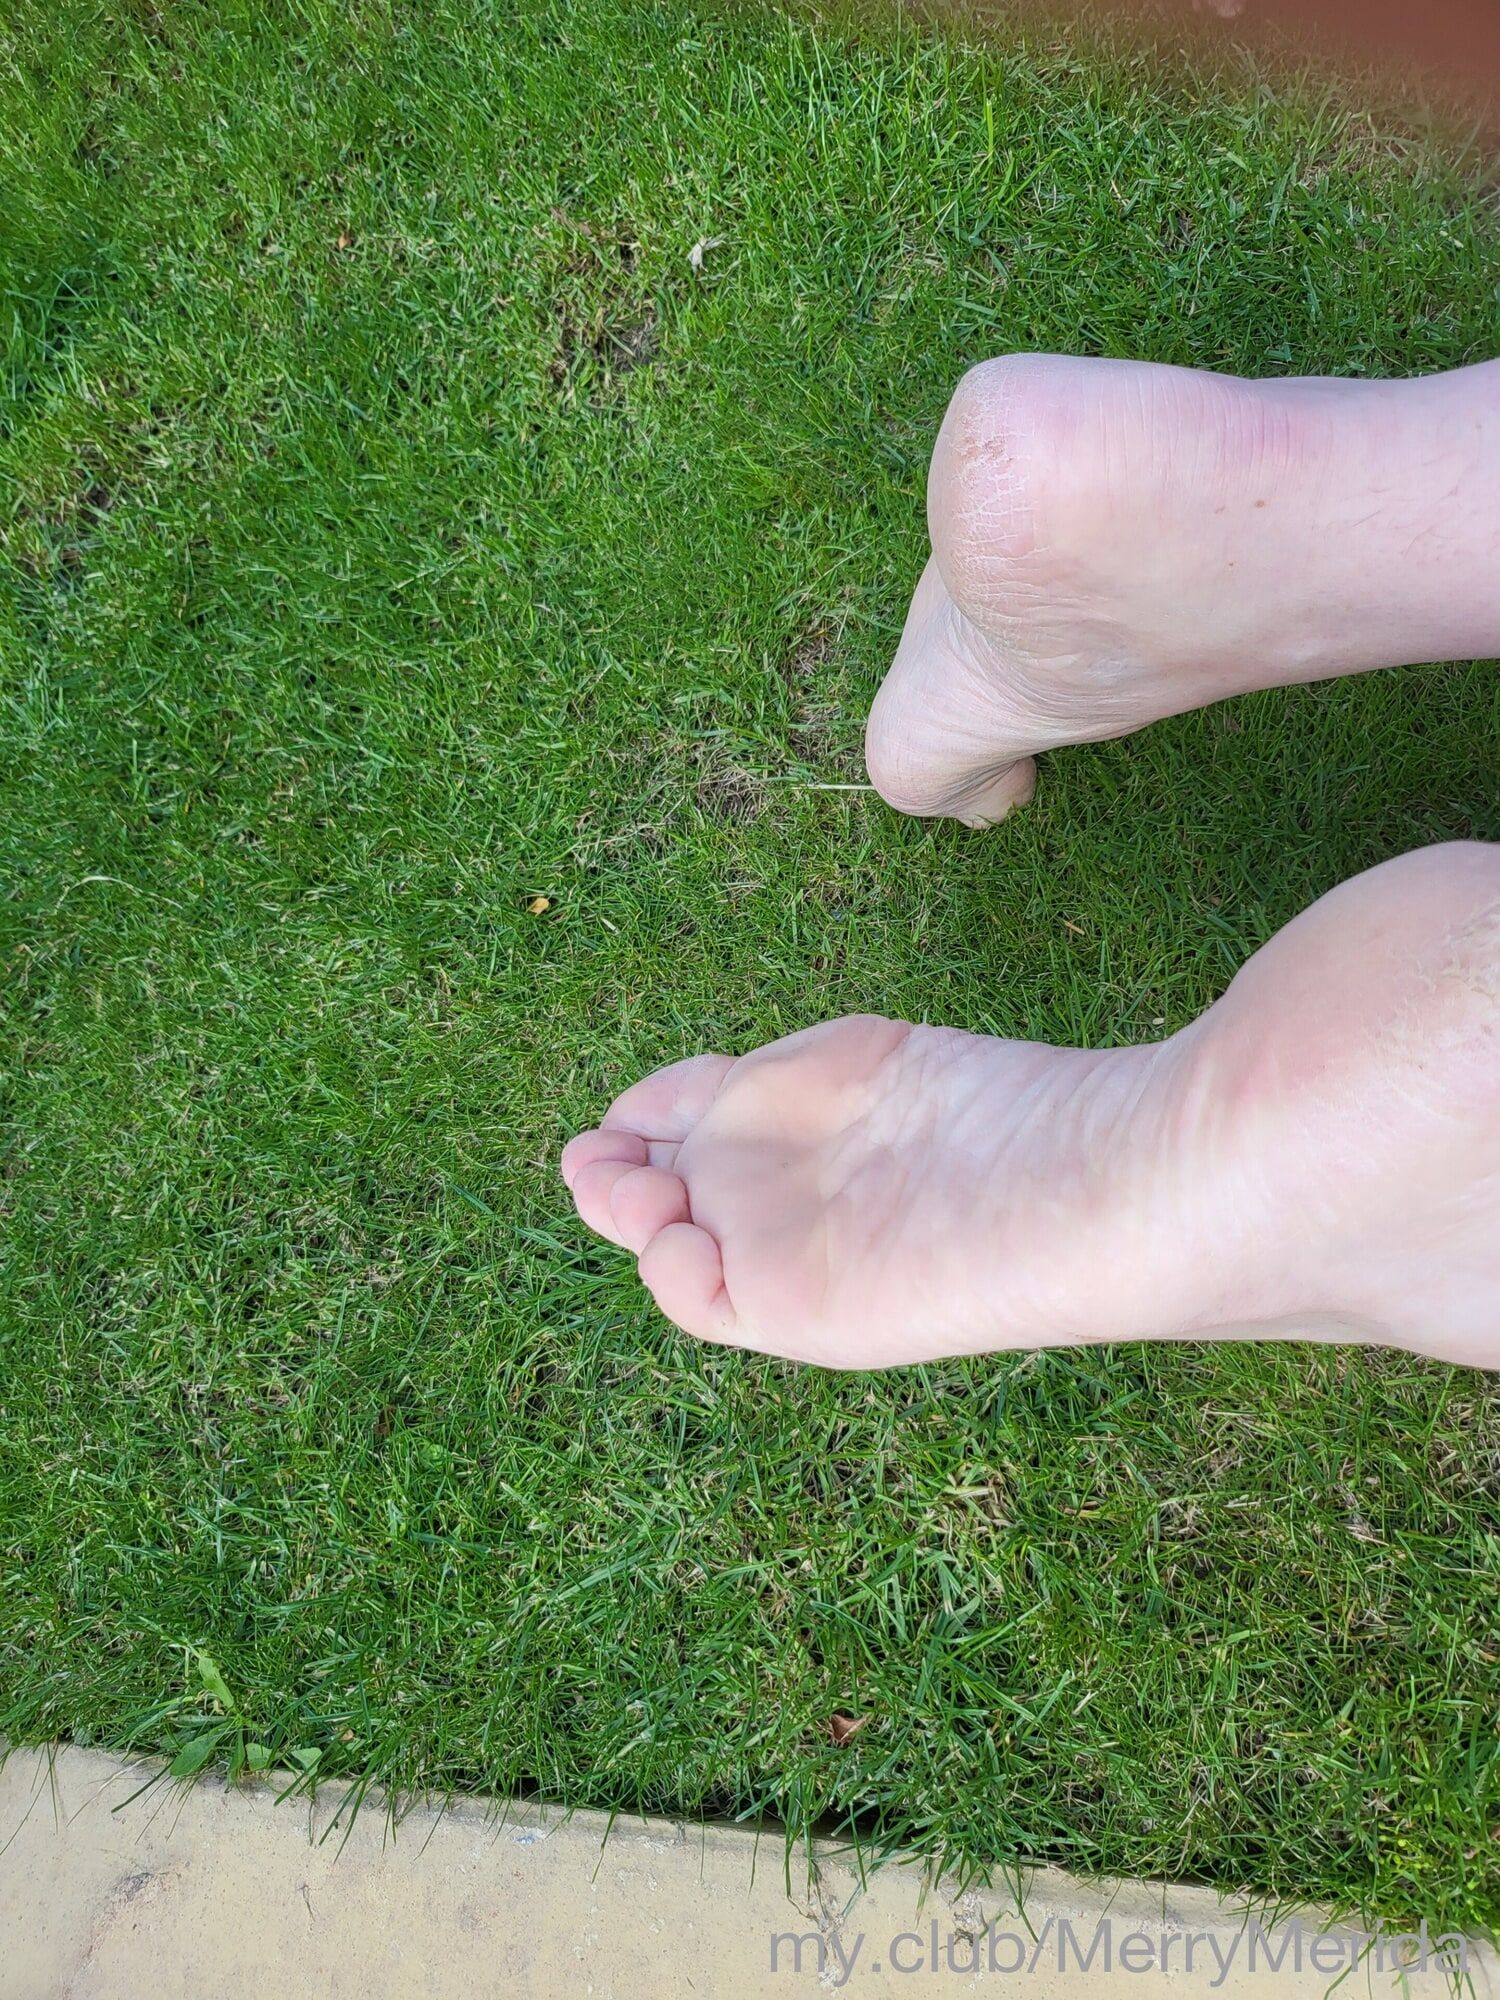 Merry Merida's unloved feet  Free Photos #5